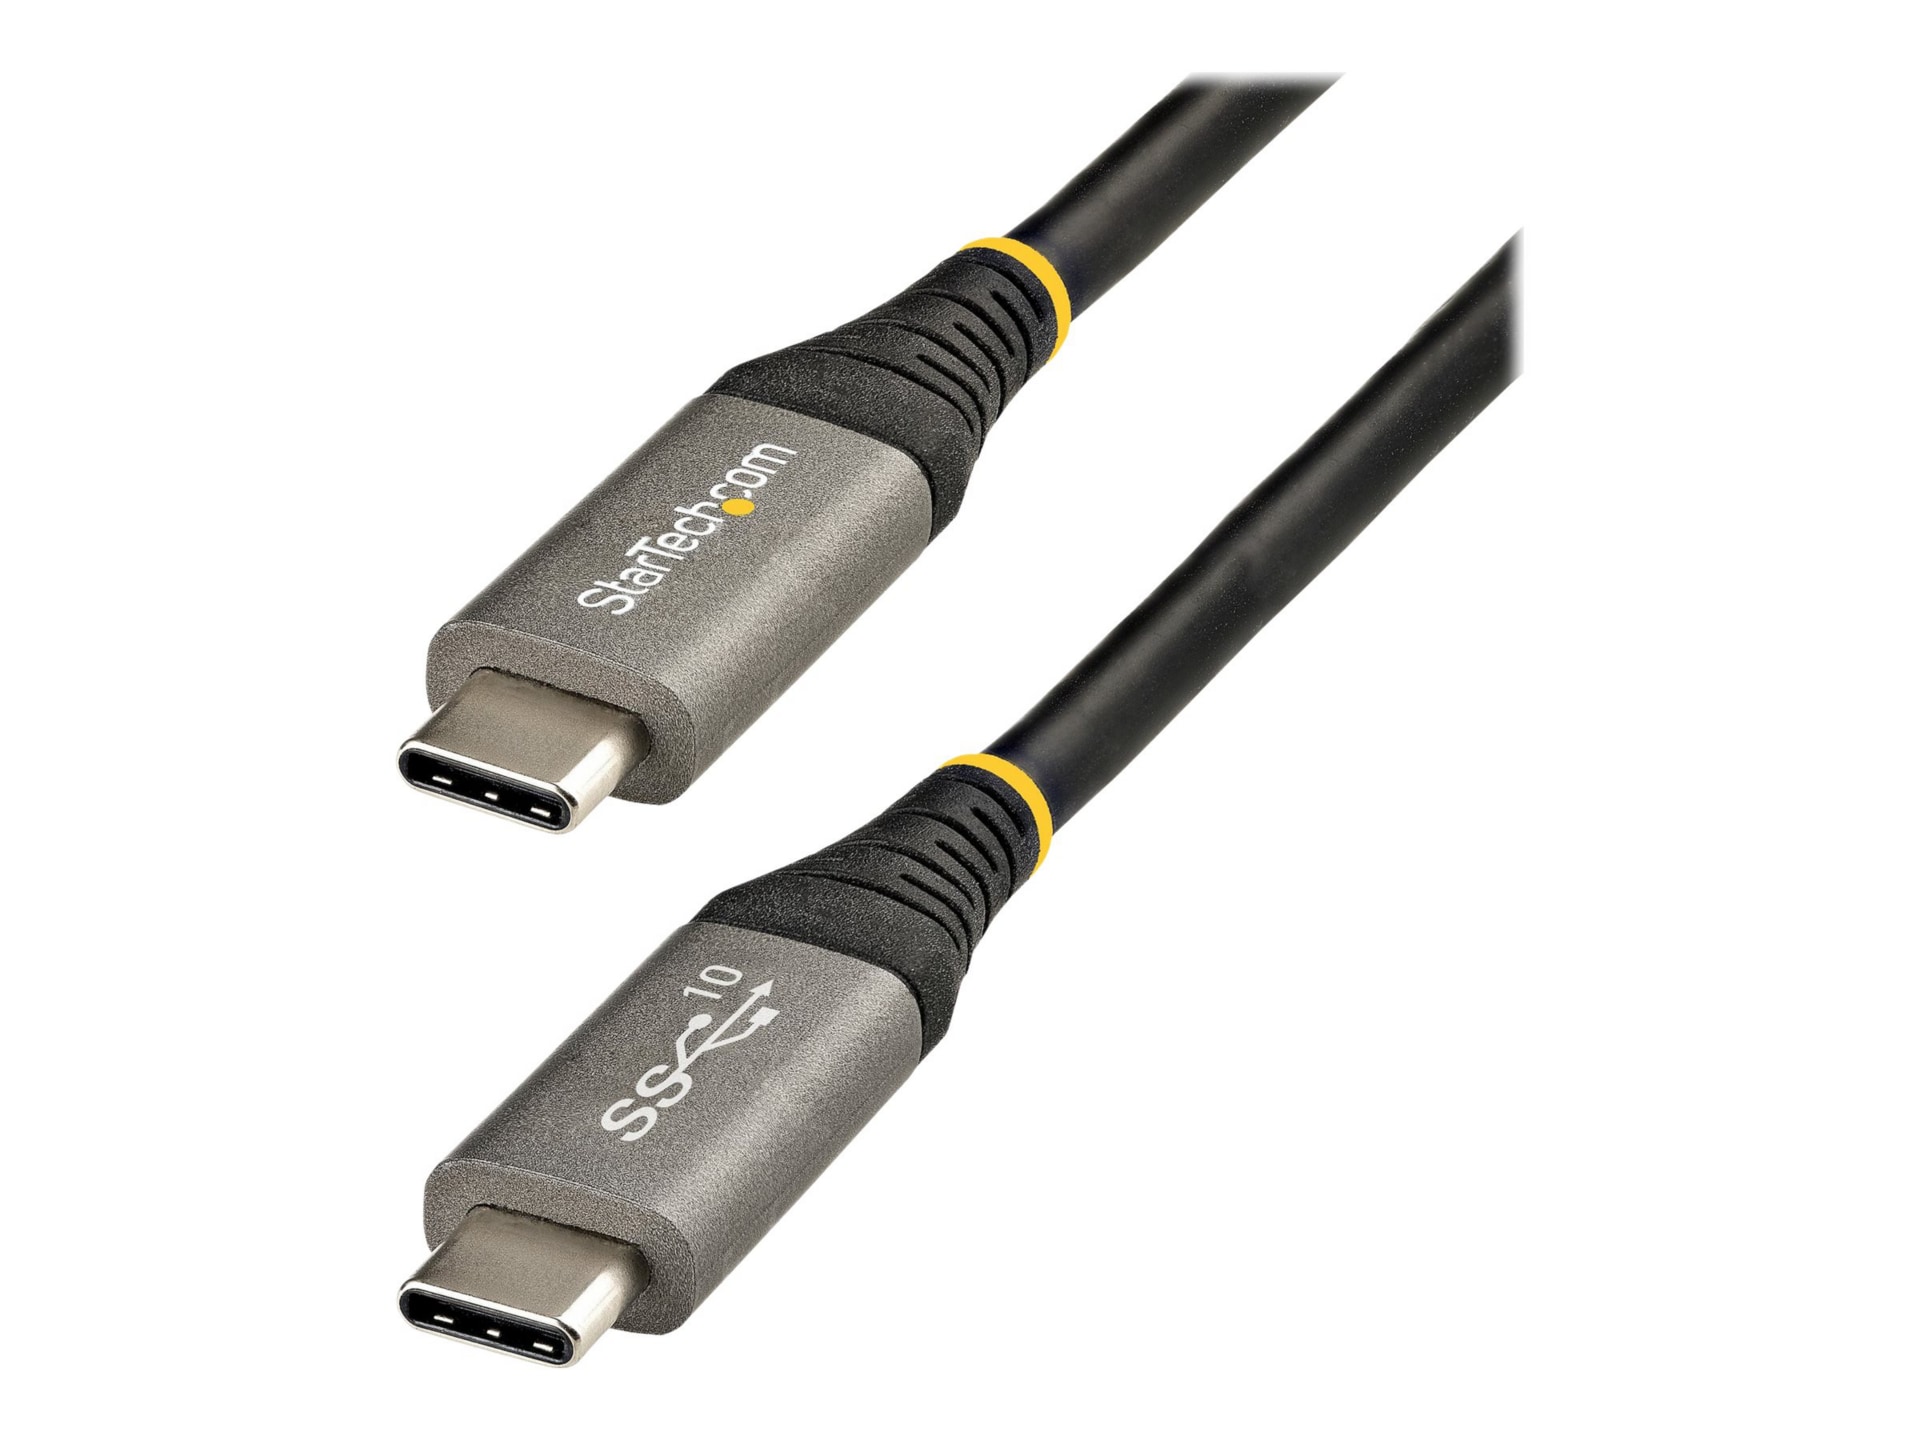 StarTech.com 6ft 2m USB C Cable, High Quality USB-C Cable, USB 3.0